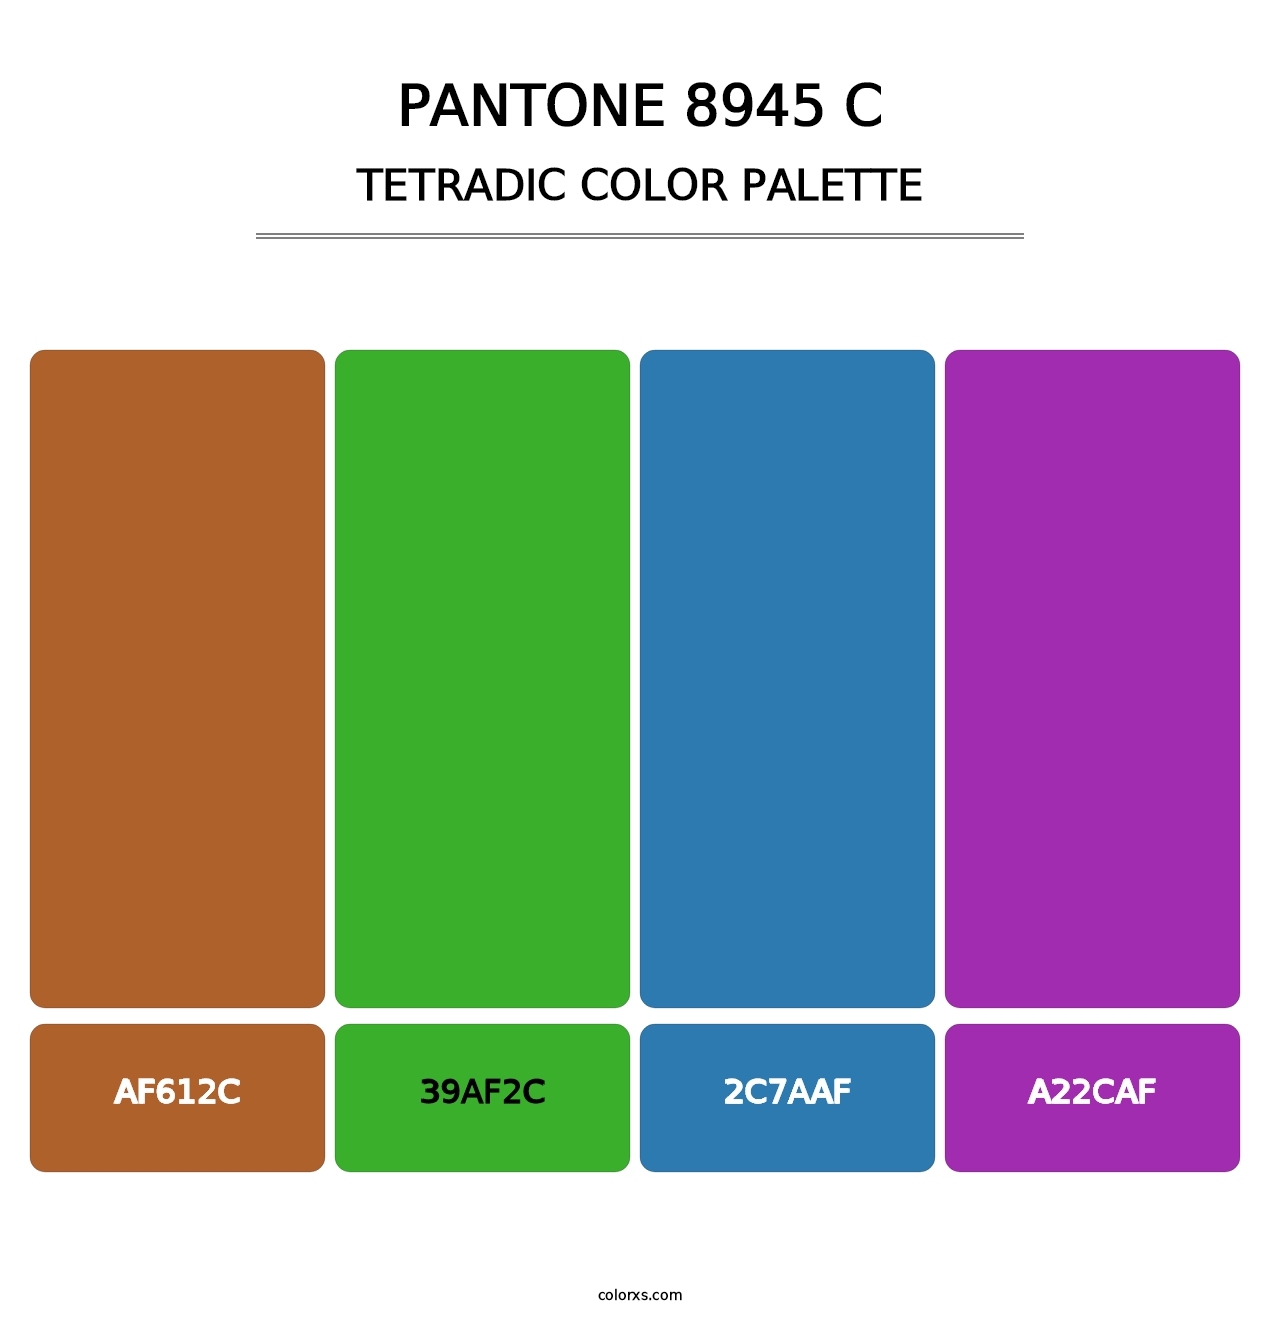 PANTONE 8945 C - Tetradic Color Palette